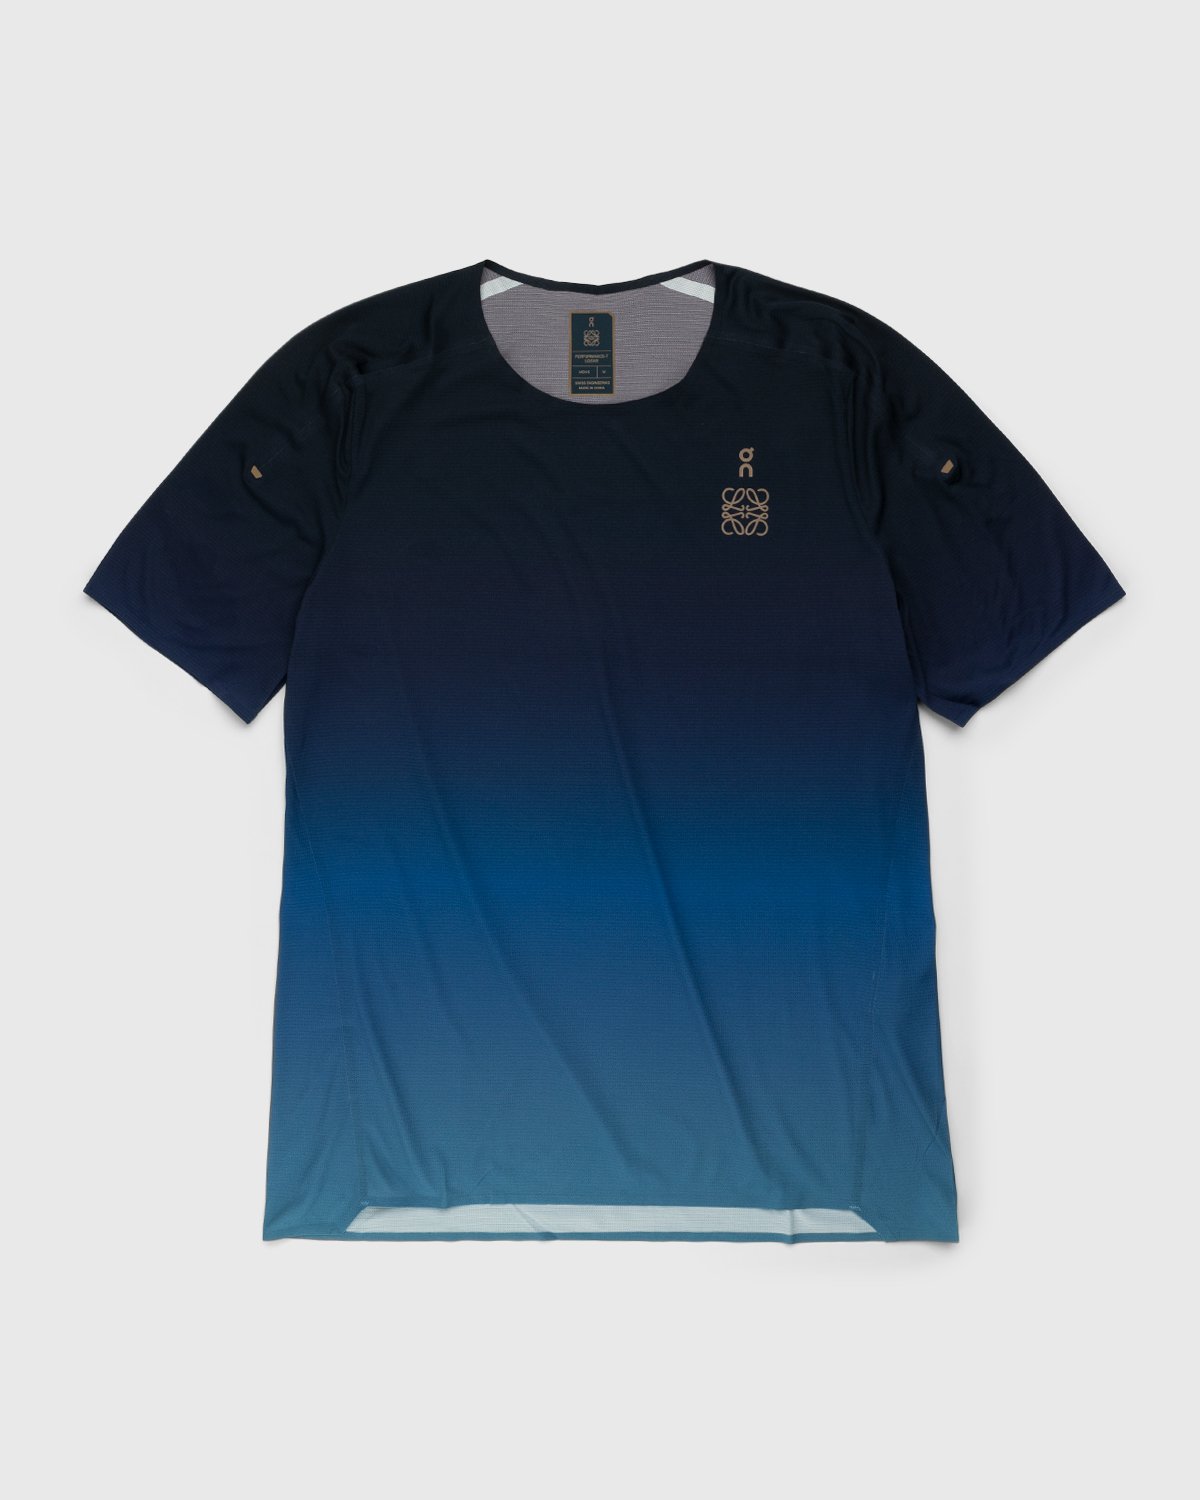 Loewe x On - Men's Performance T-Shirt Gradient Blue - Clothing - Blue - Image 1